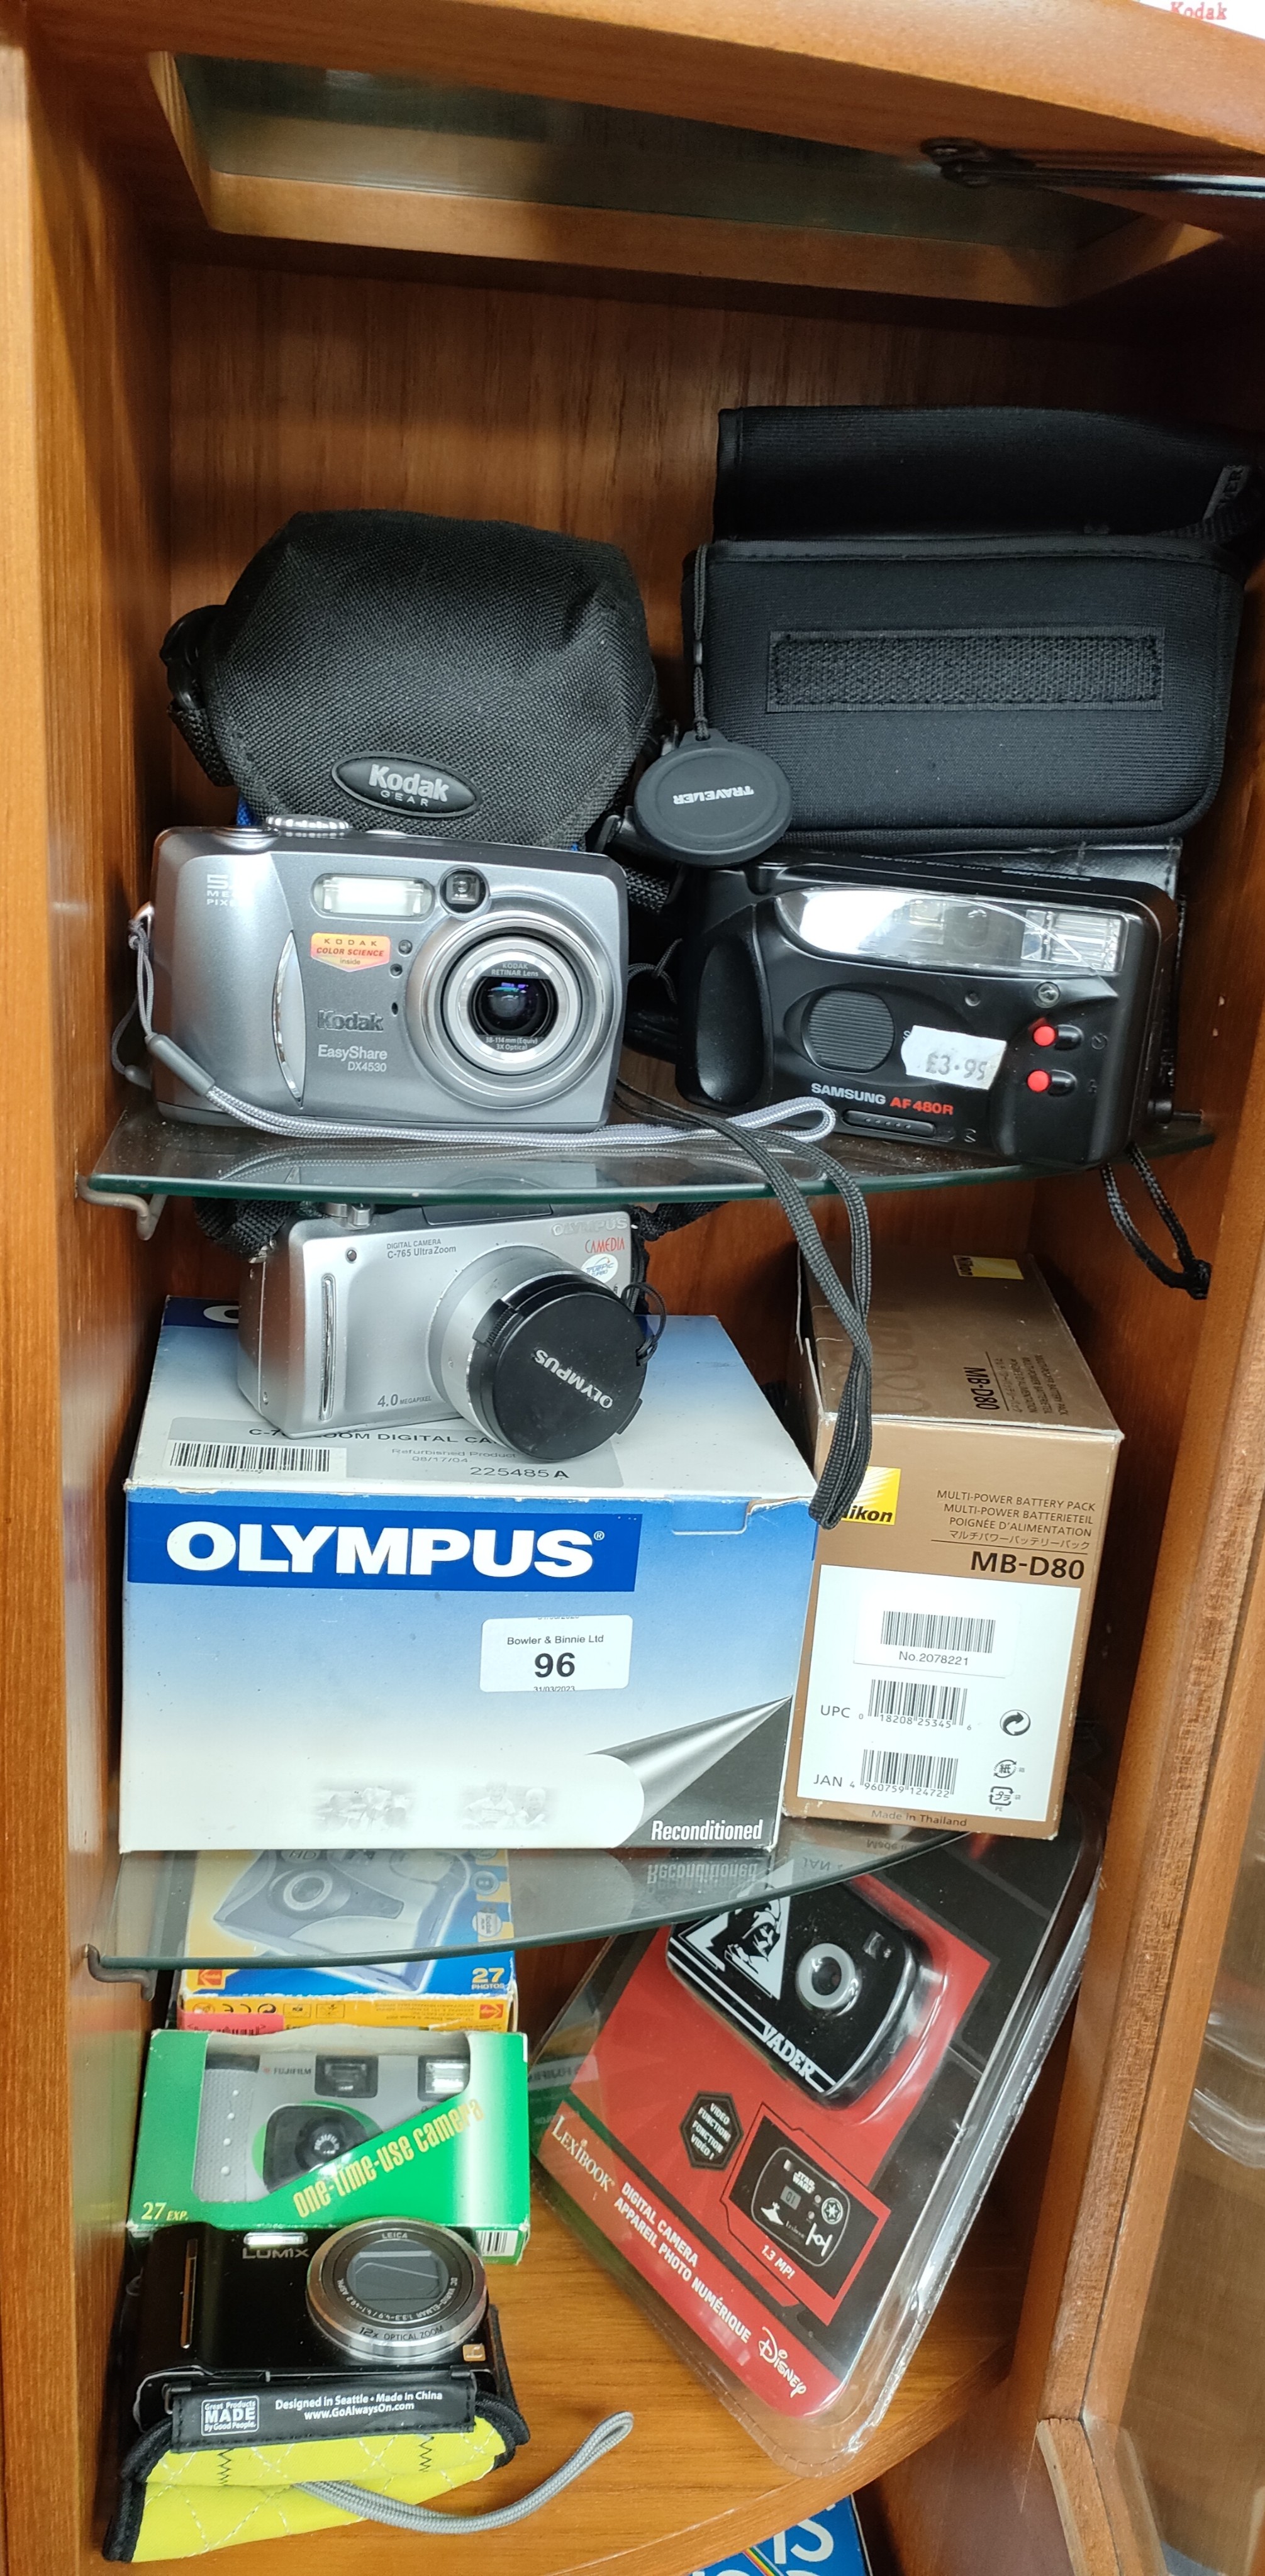 3 Shelves of modern cameras includes Olympus digital c765 ultra zoom, Kodak camera etc